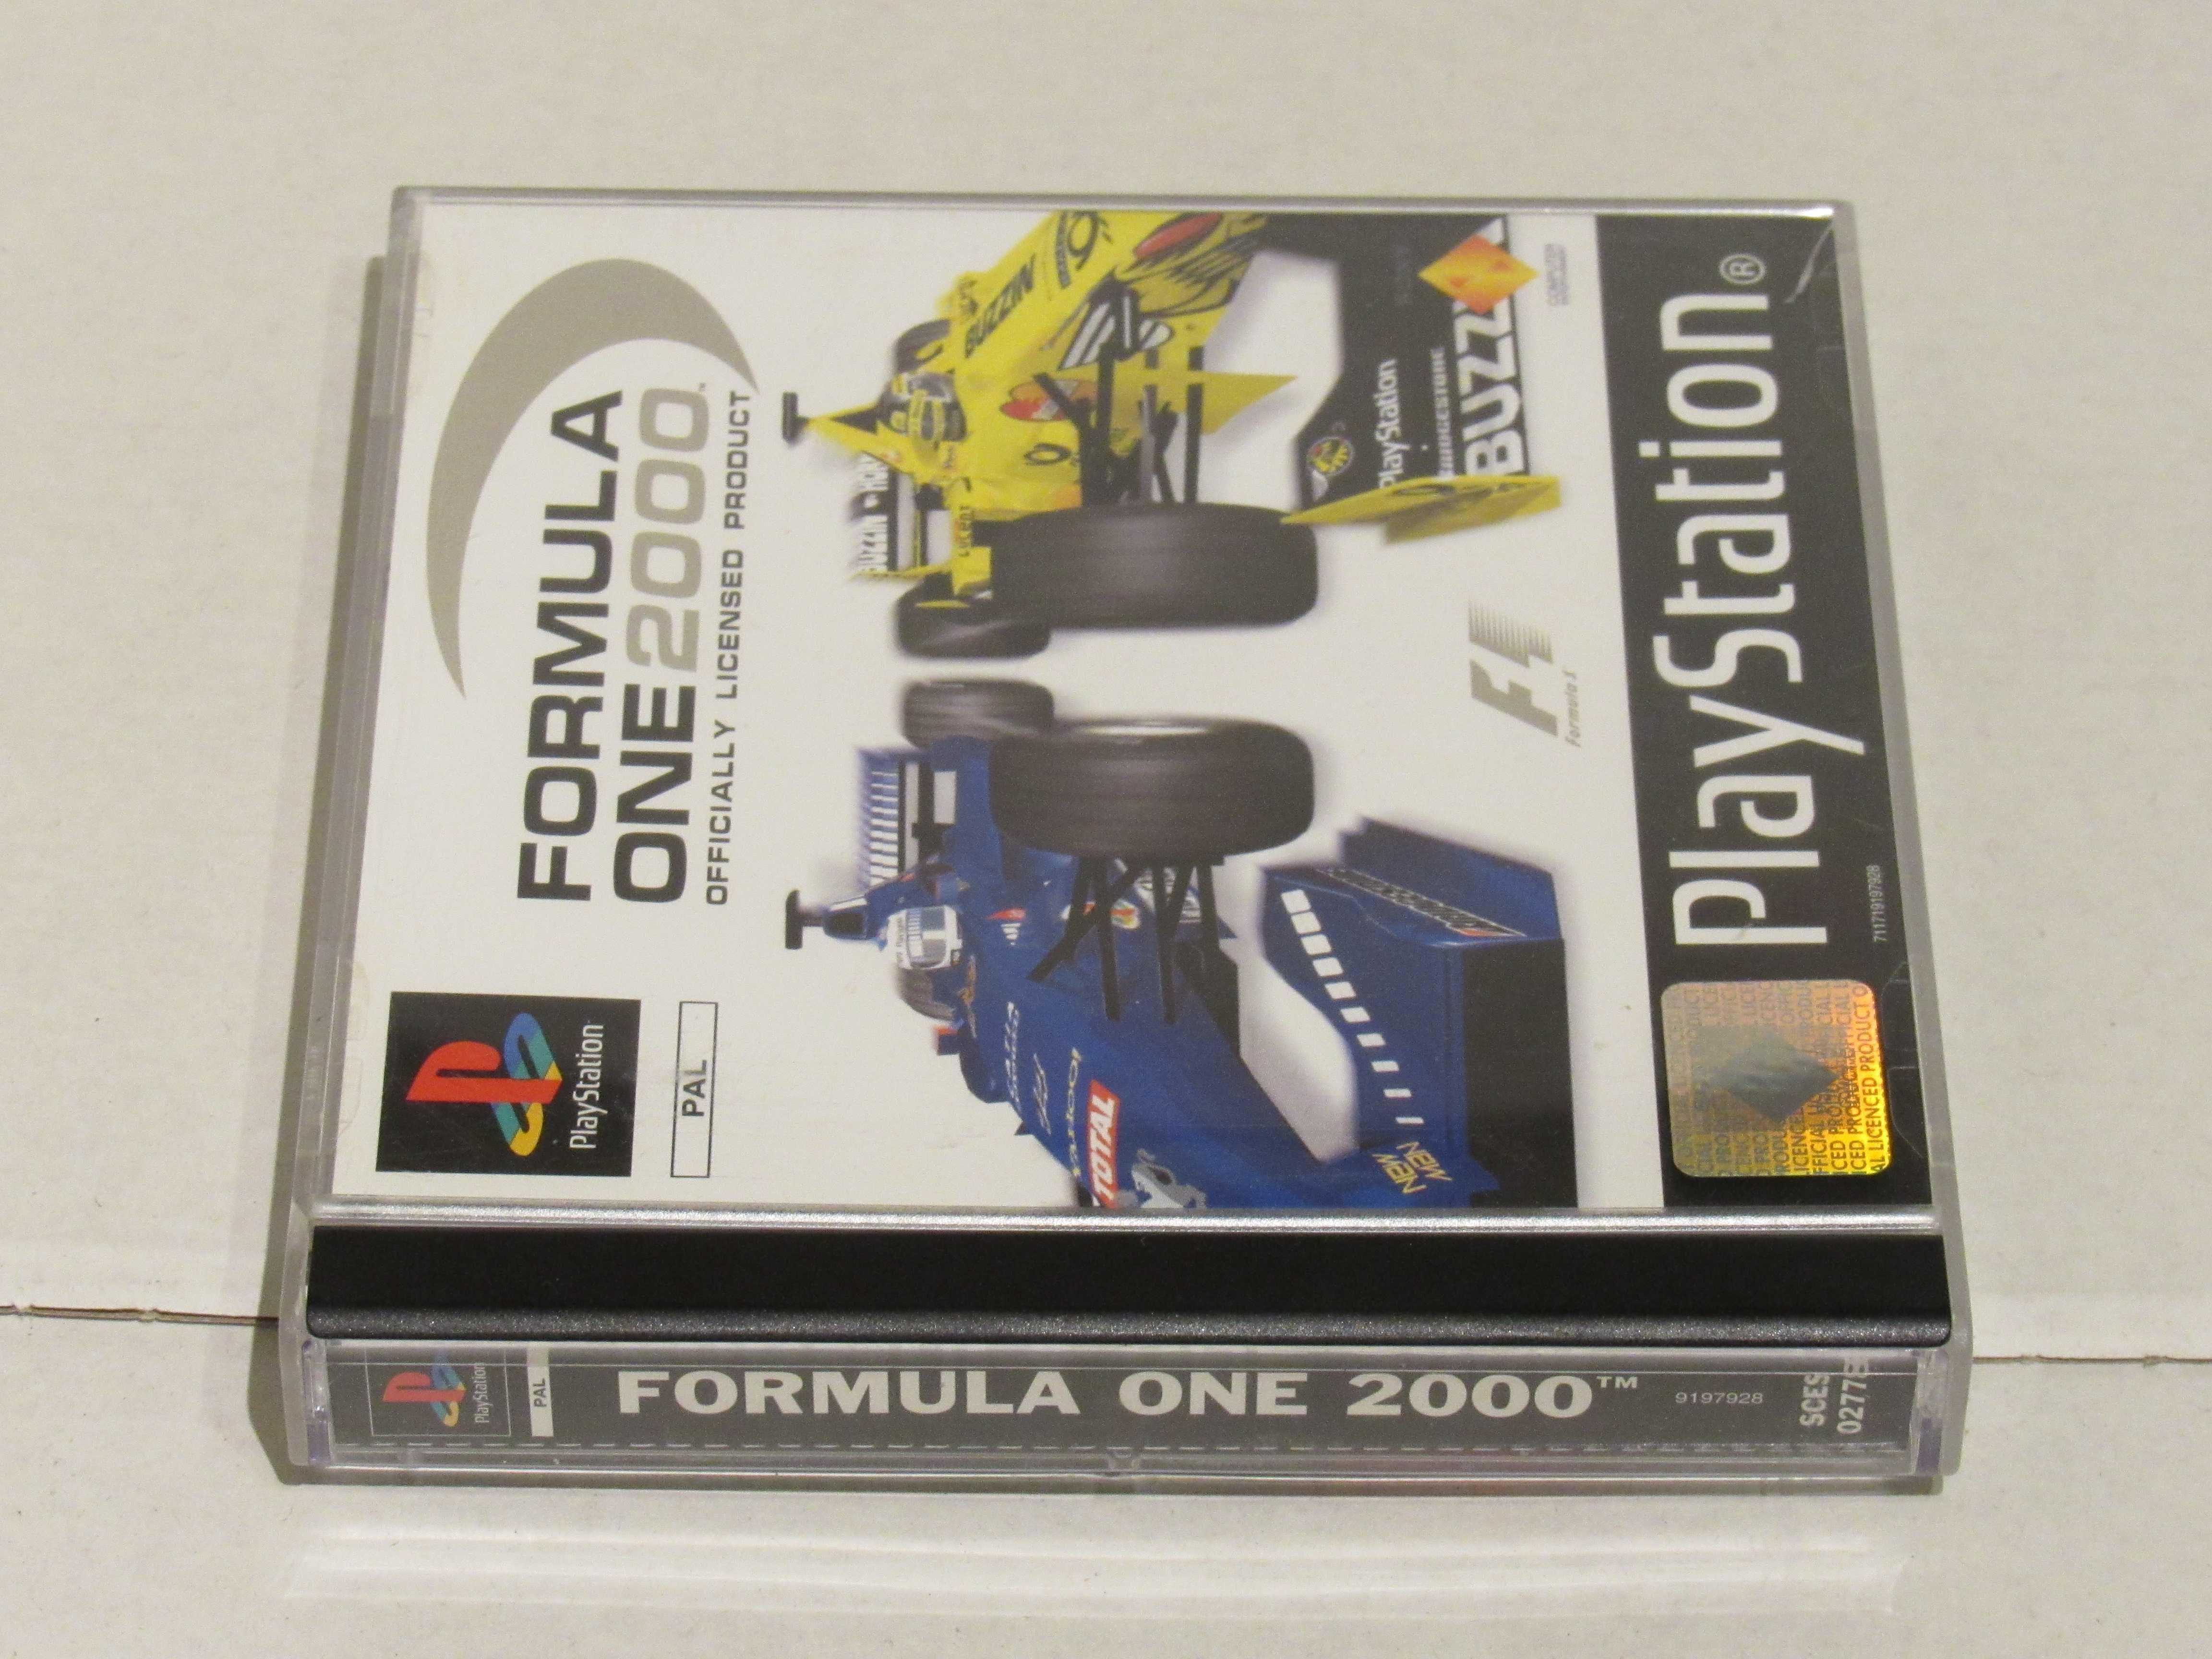 Jogo Playstation PS1 PSX PSOne Formula One 2000 completo